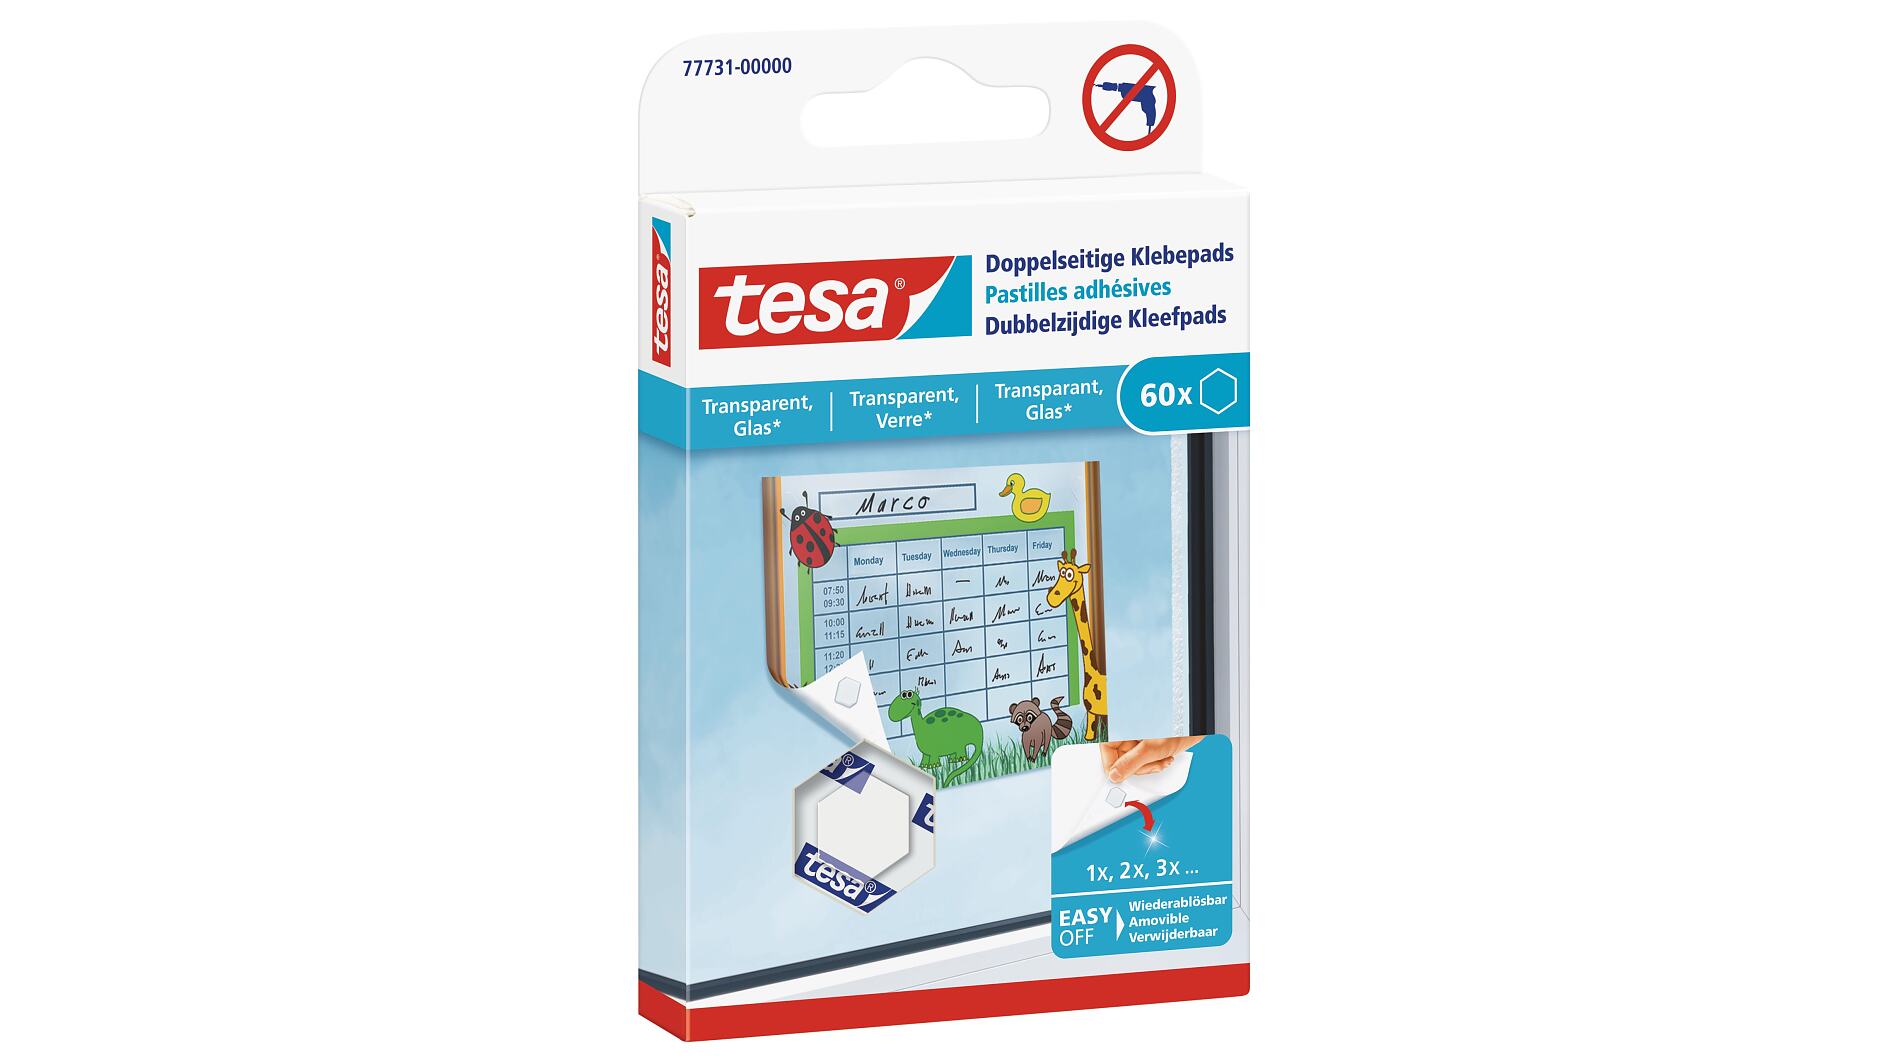 TESA PRO DOUBLE-FACE TAPE TRANSPARENT 0,2mm 25Mx19mm